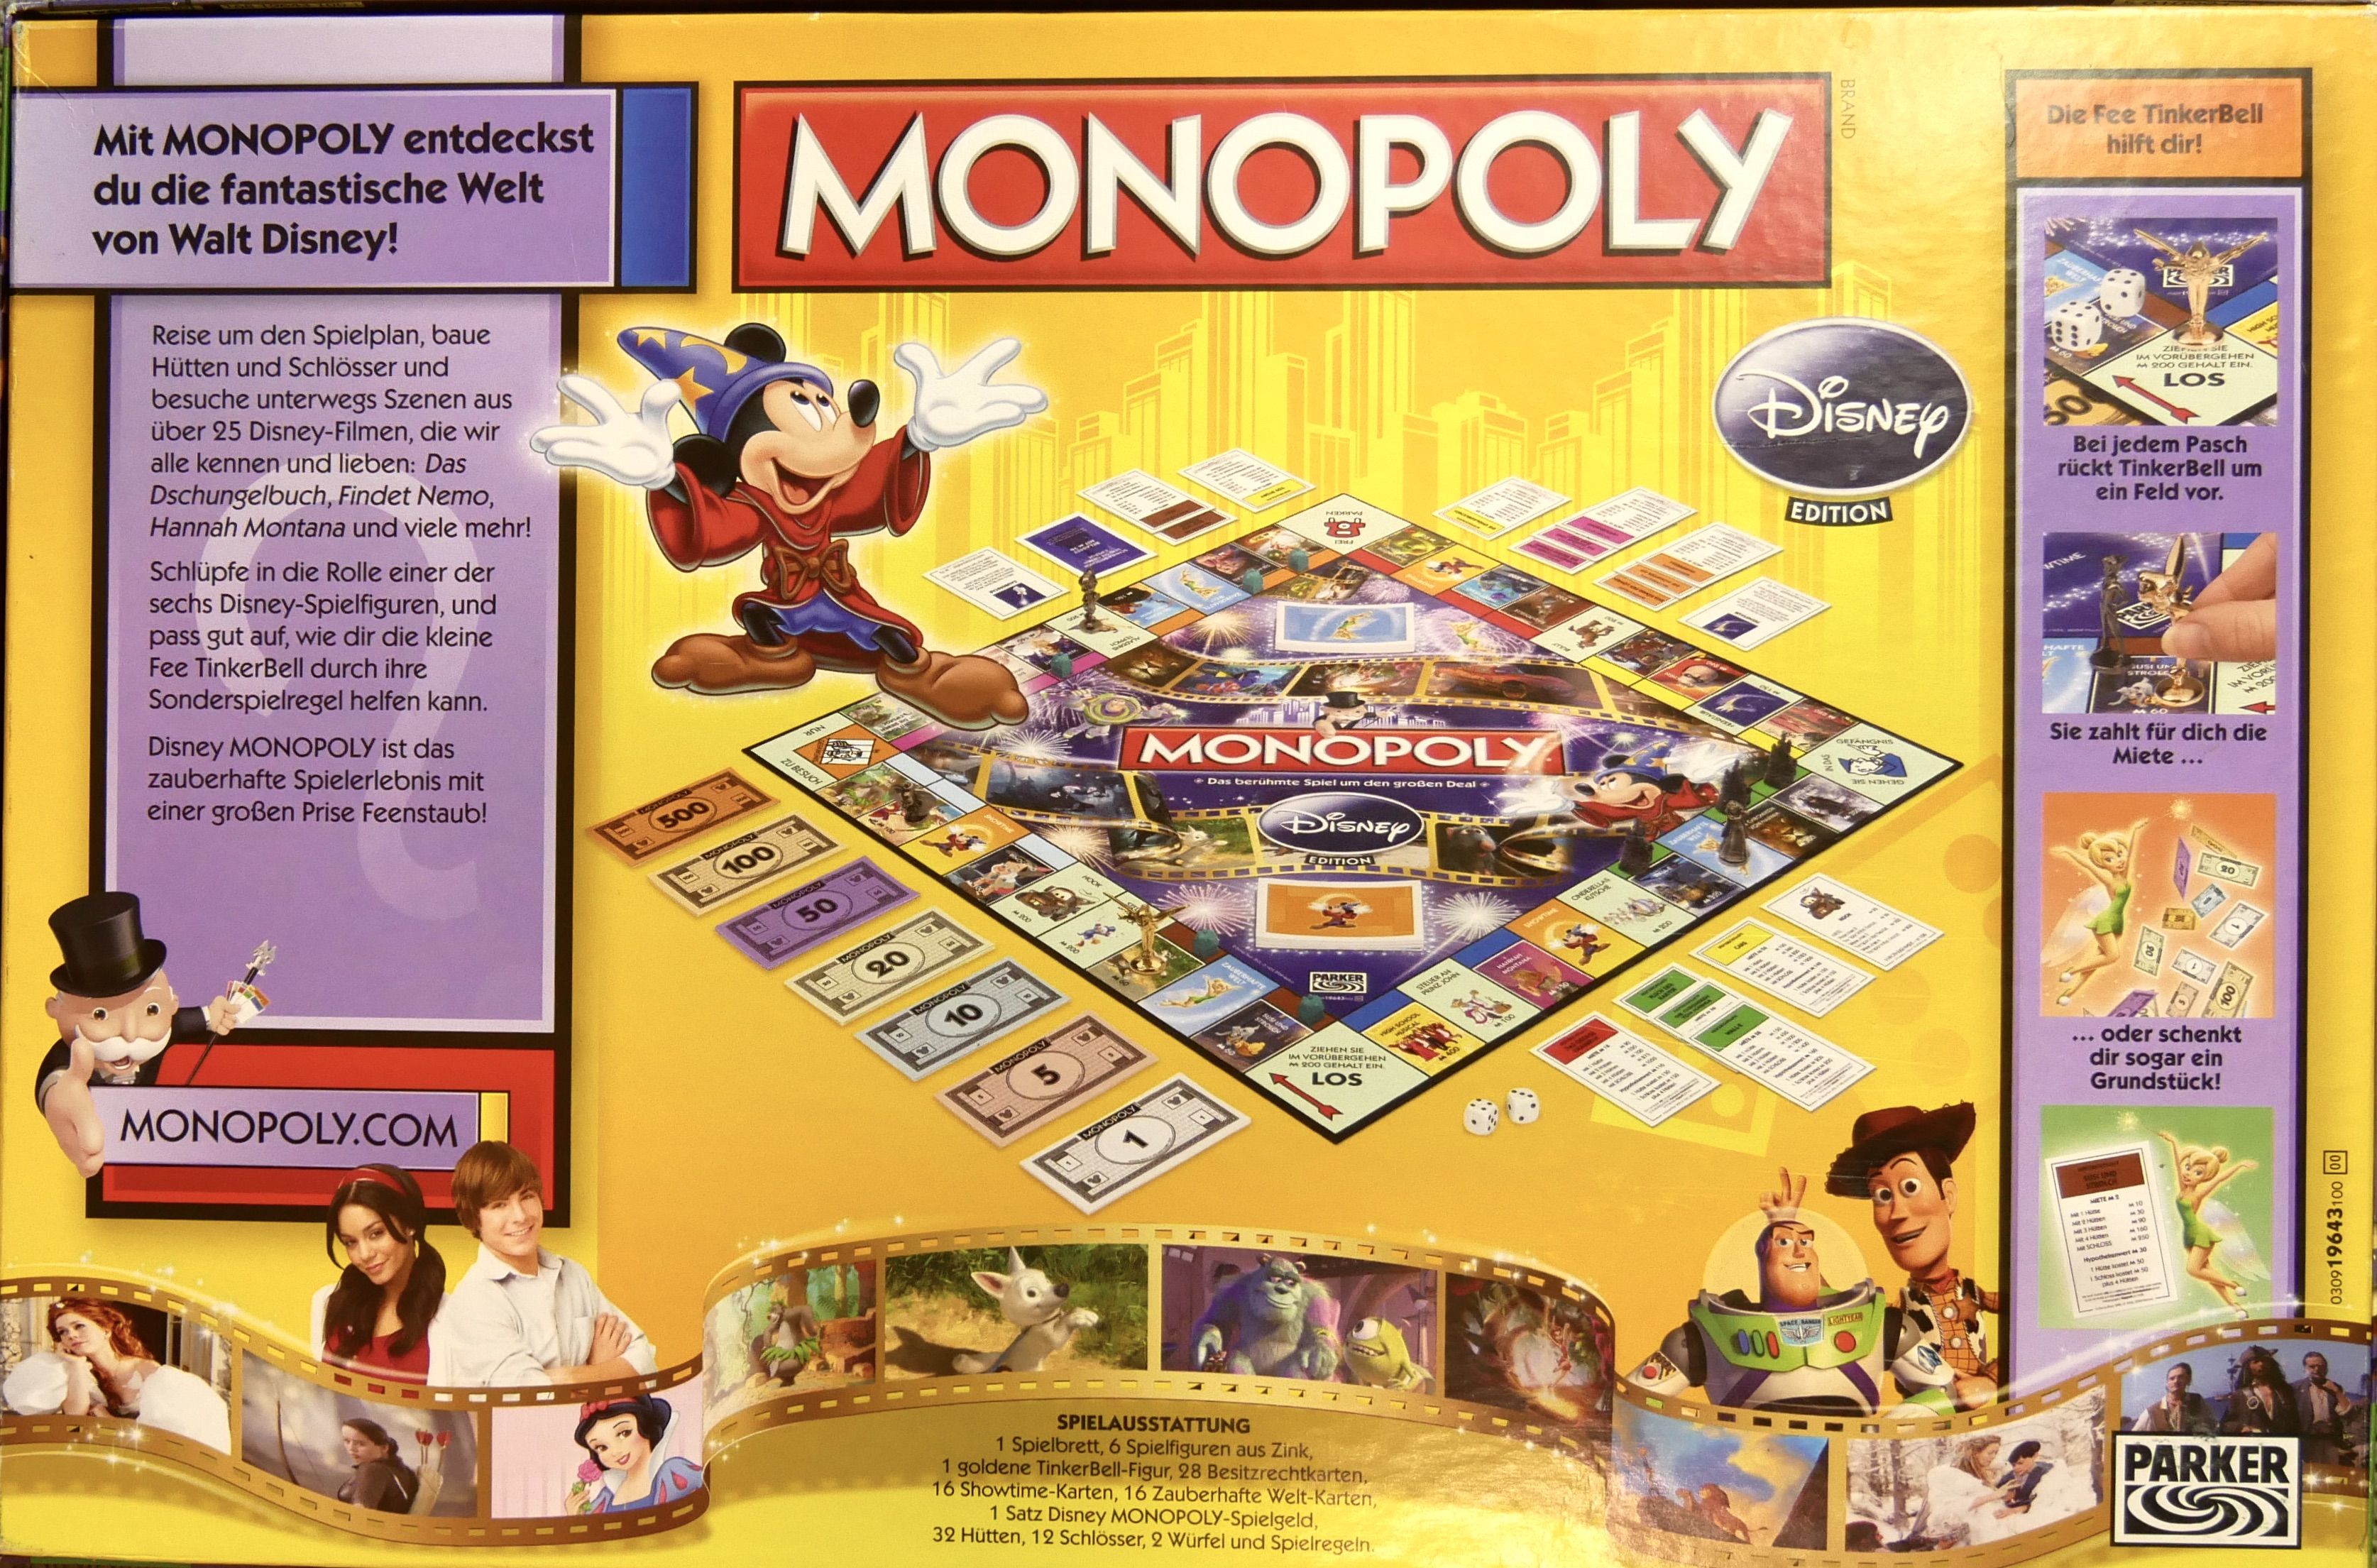 Monopoly: Disney Image | BoardGameGeek